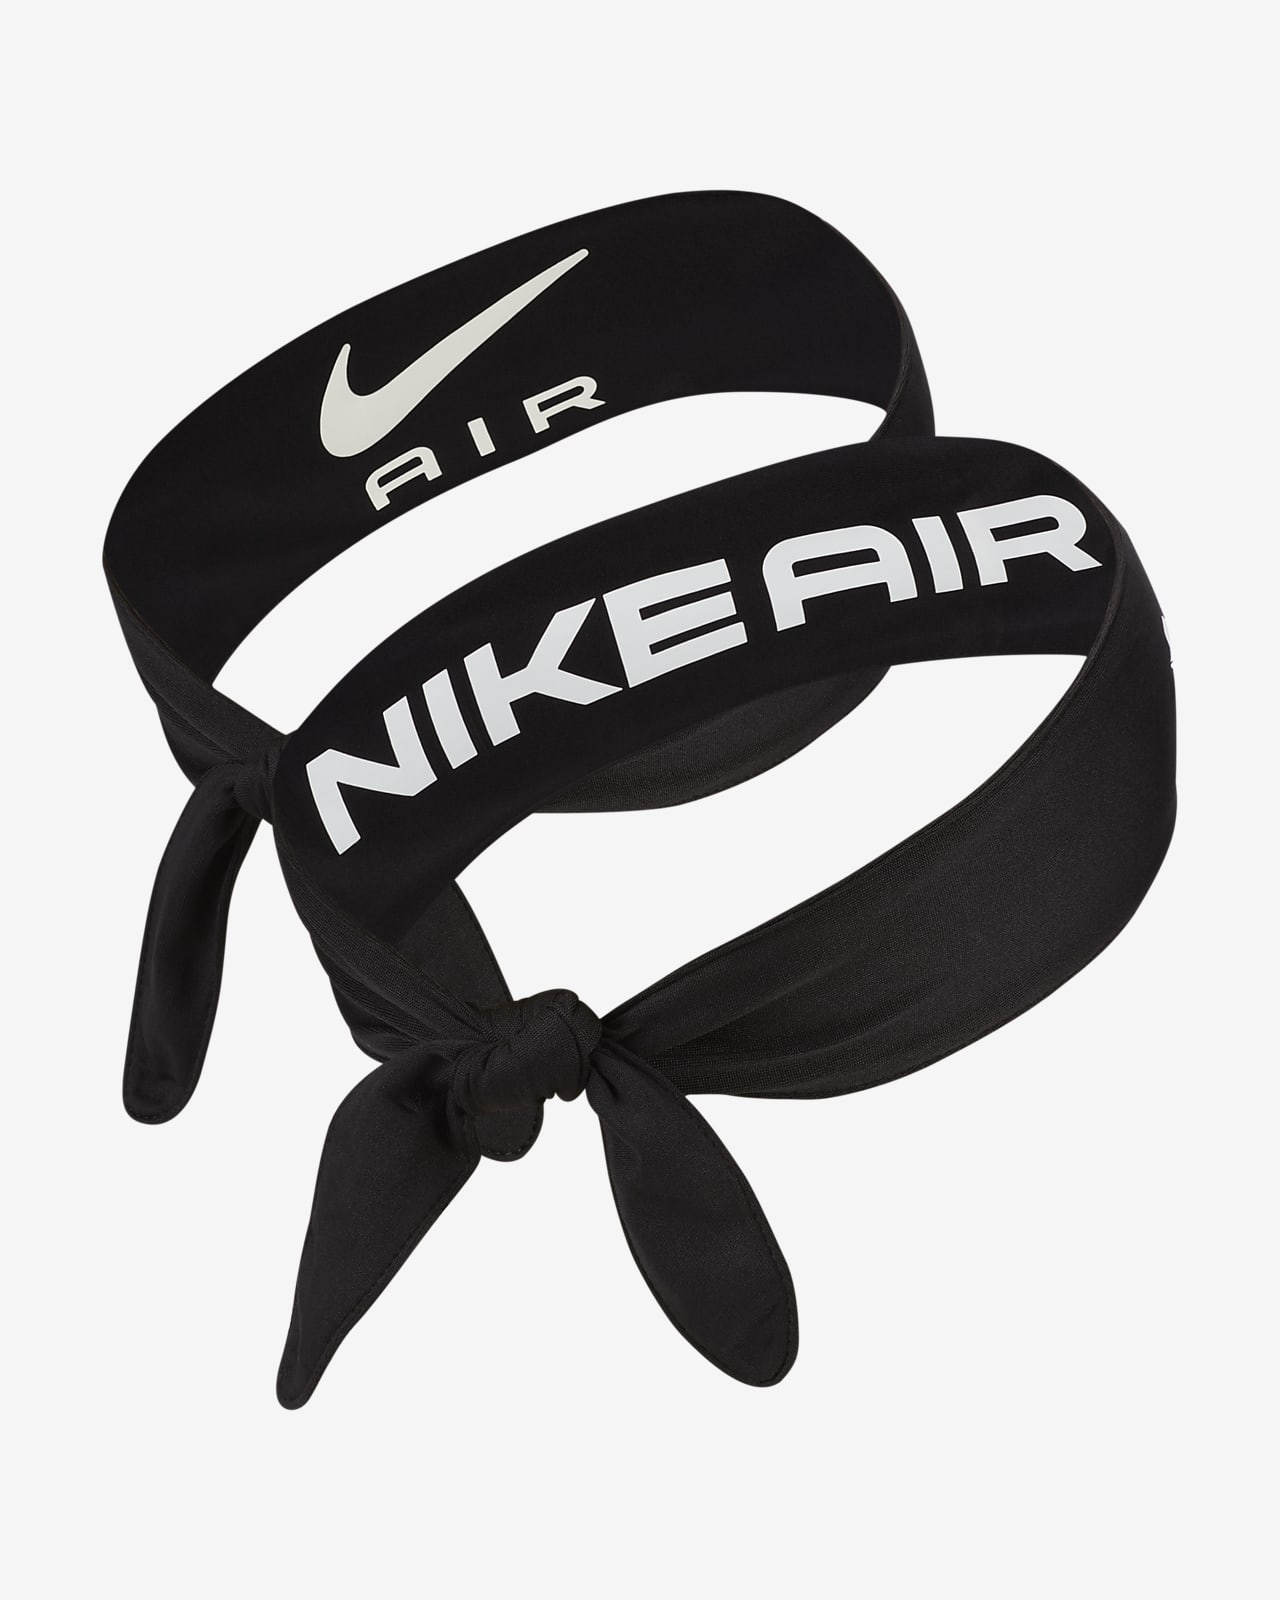 Bandeau femme Nike Premier - Nike - Marques - Textile